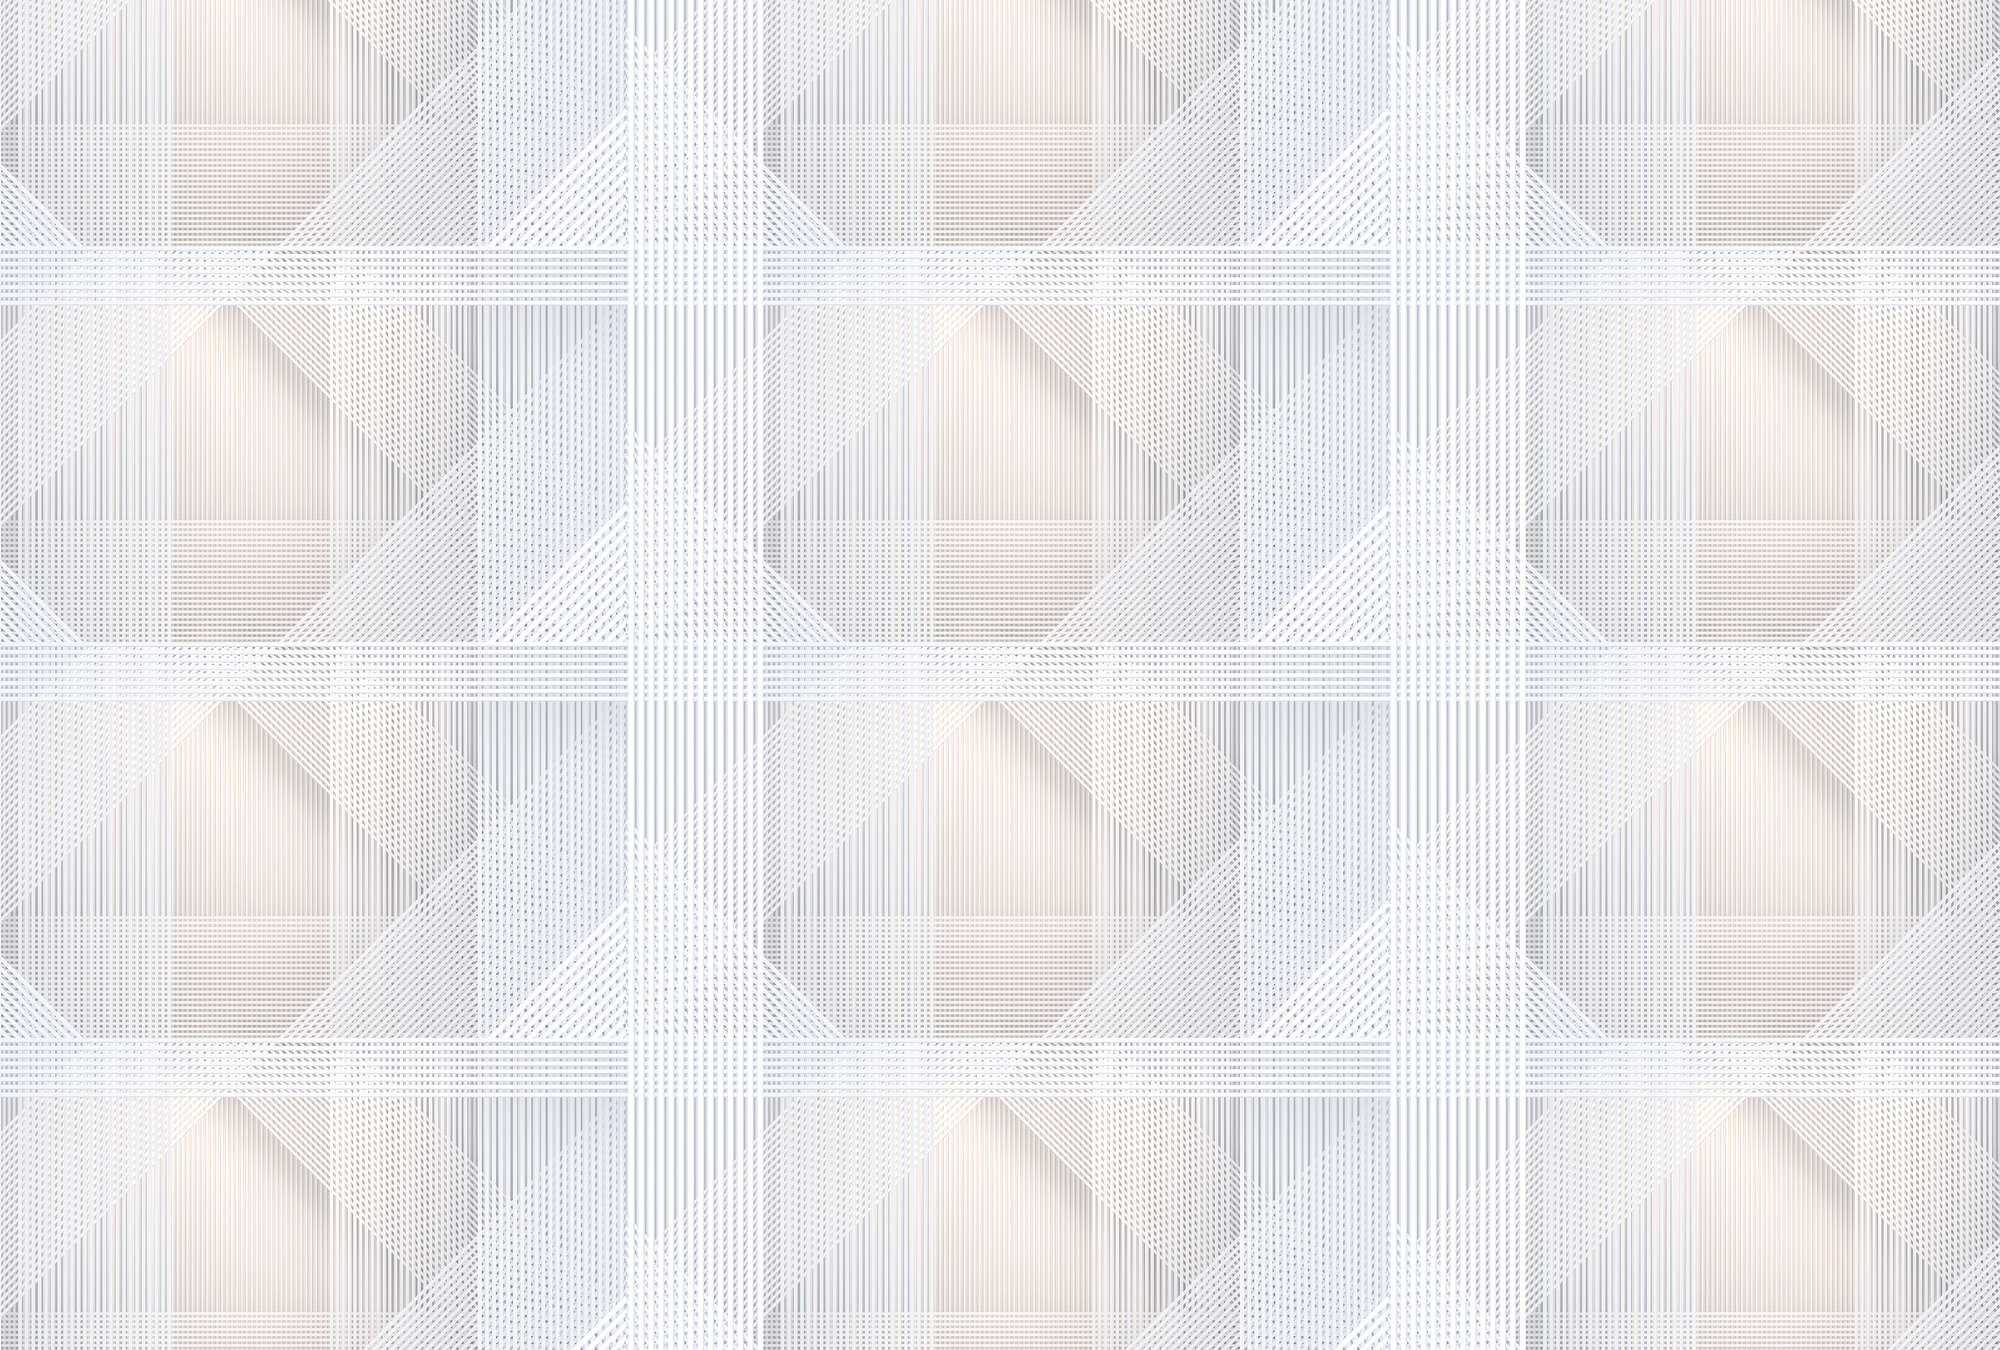             Strings 1 - Fototapete geometrisches Streifen Muster – Grau, Orange | Premium Glattvlies
        